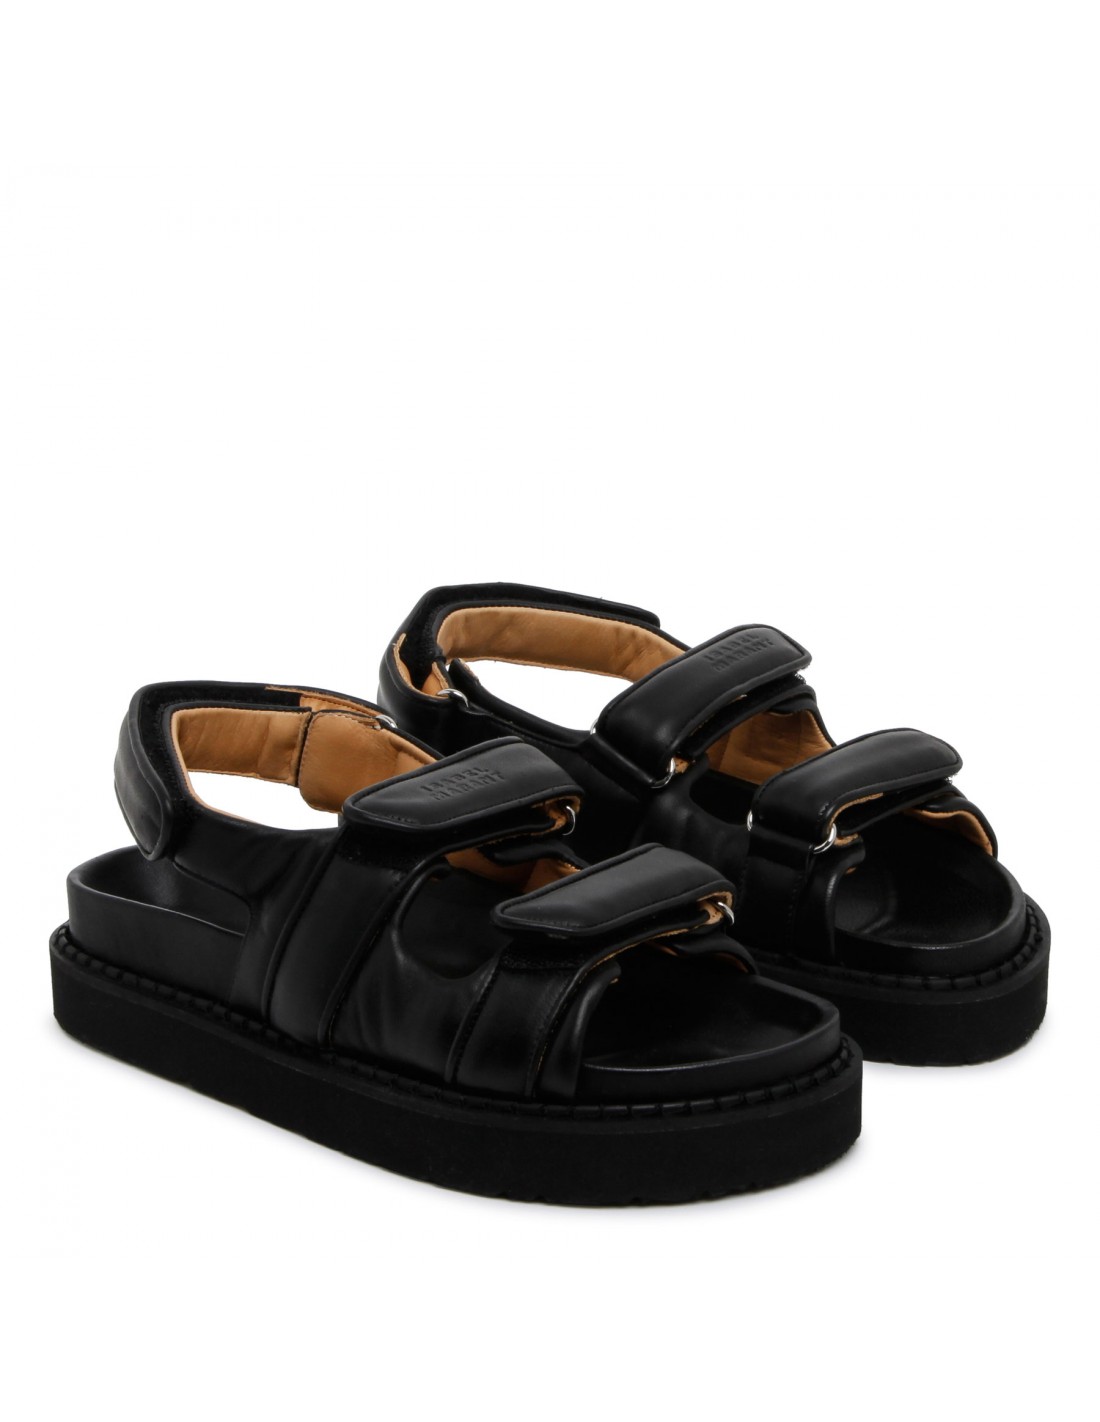 Madee black sandals